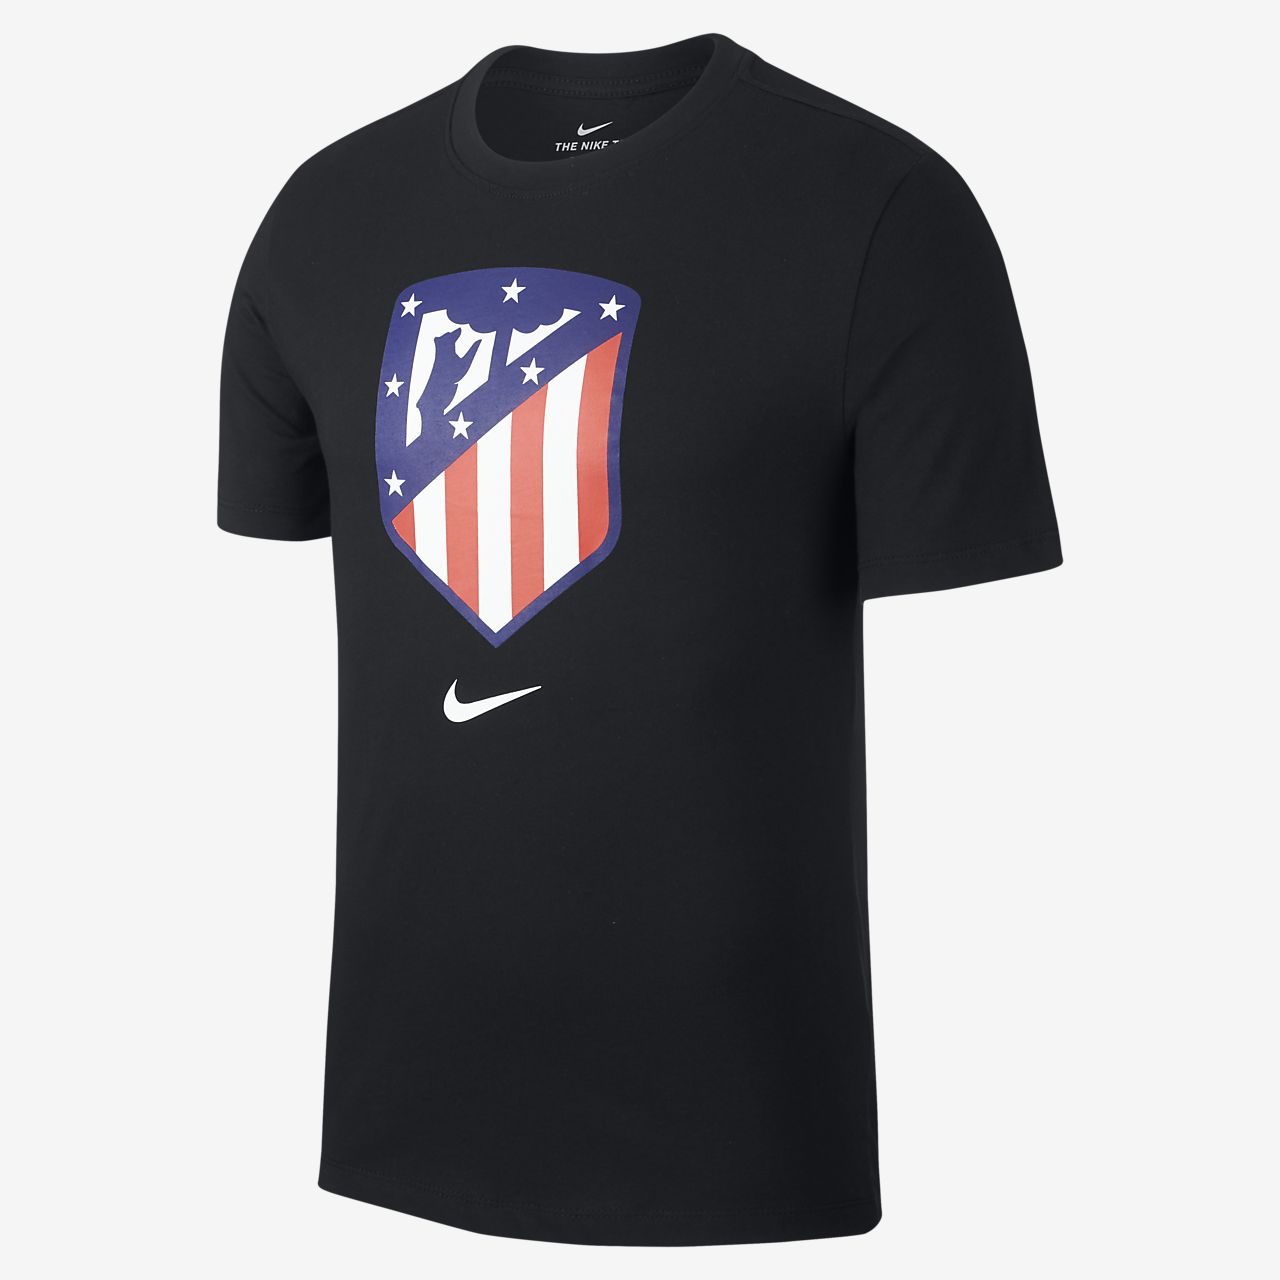 atletico madrid t shirts